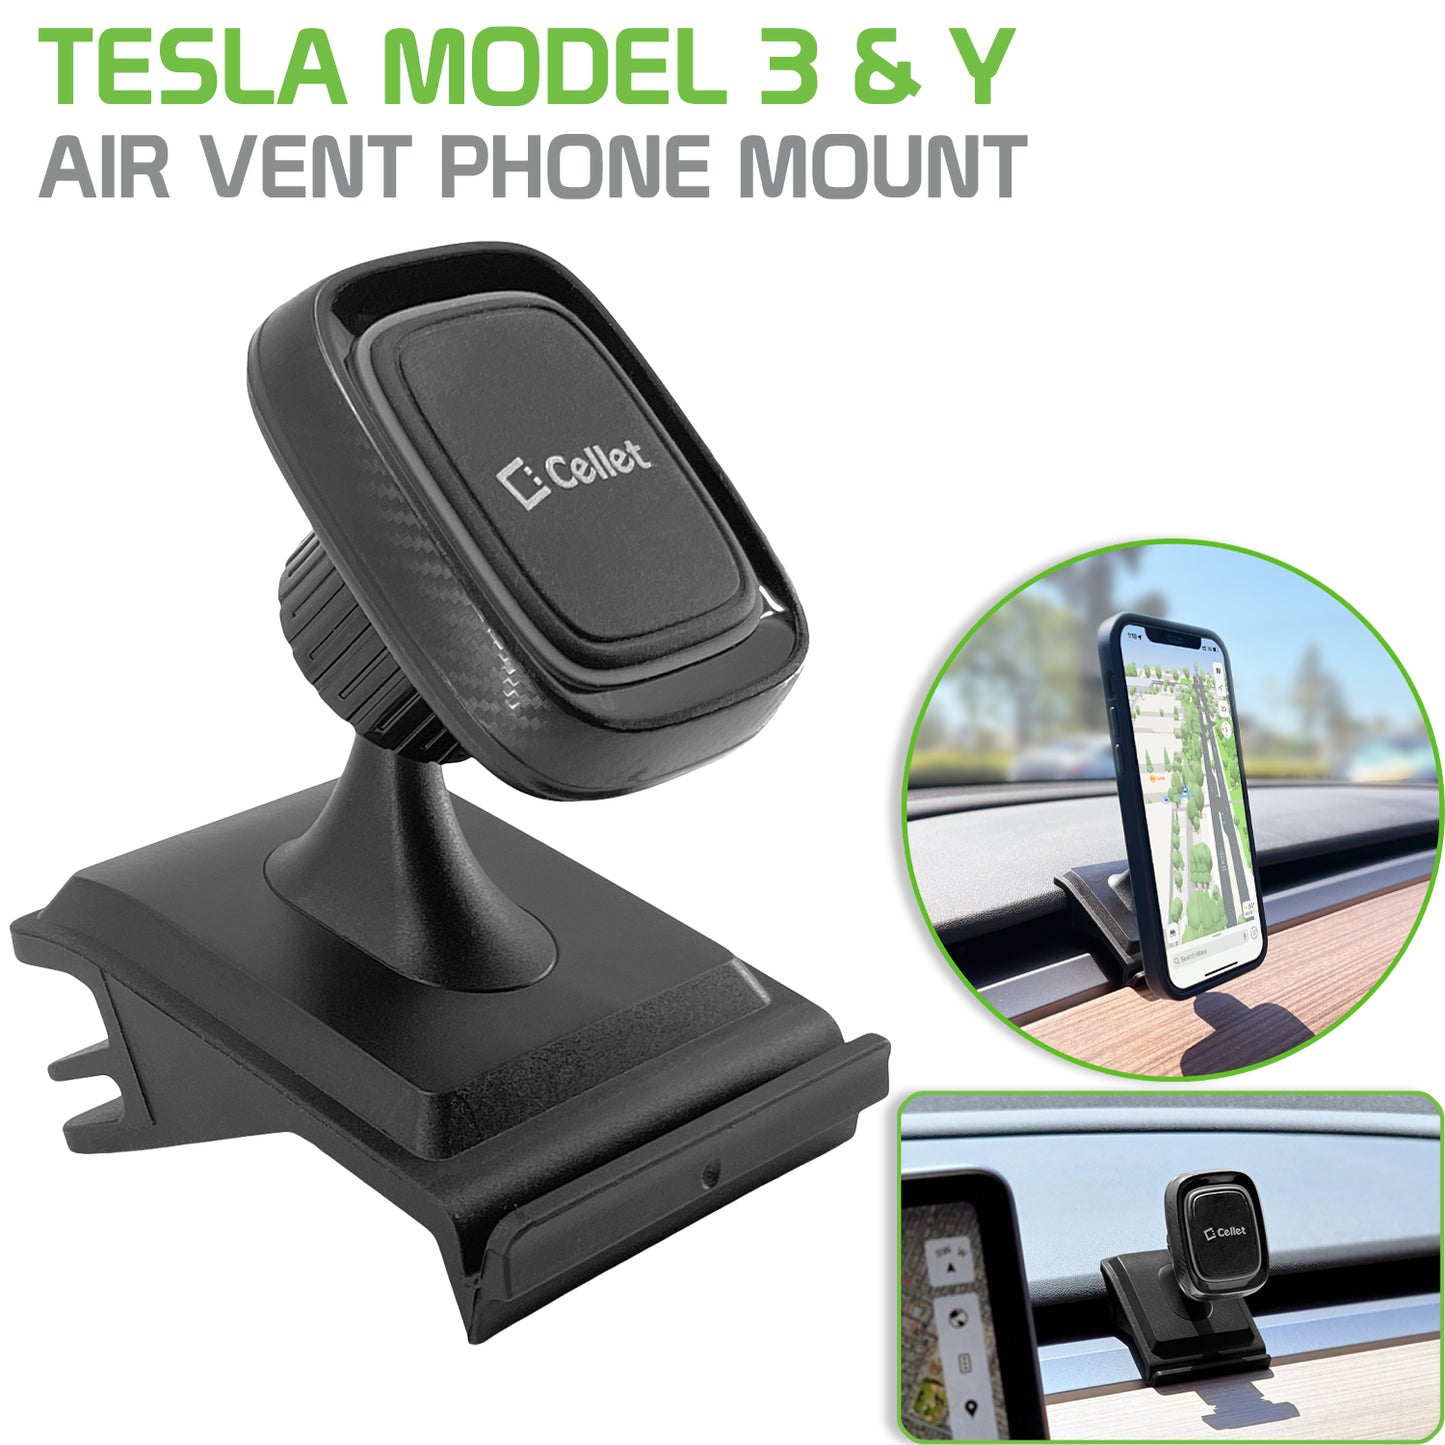 PH210 -Tesla Model Y & Tesla Model 3 Magnetic Air Vent Phone Mount, Magnetic Phone Holder Compatible to iPhone Samsung Galaxy Google Pixel moto